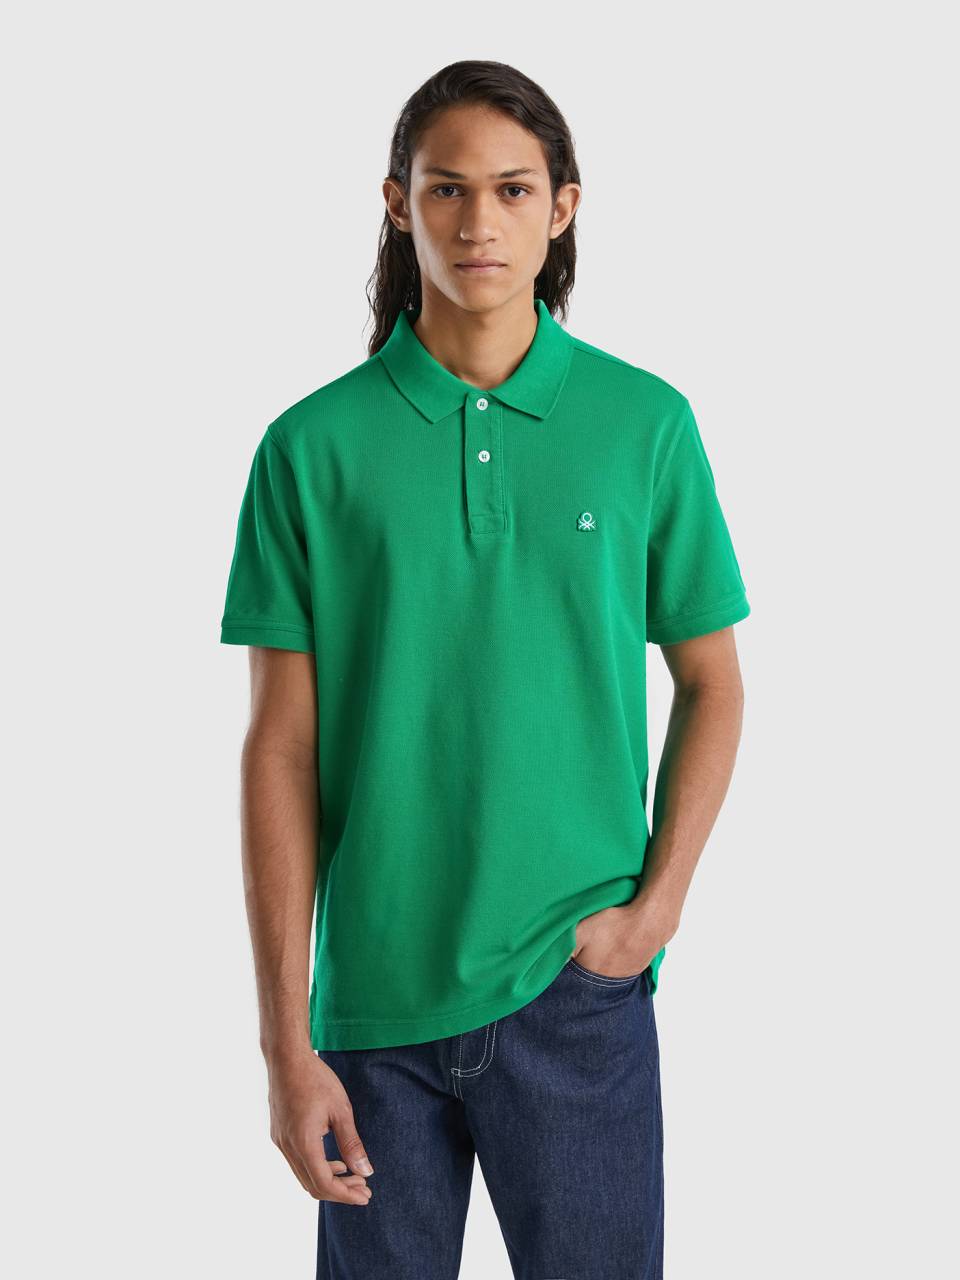 Green - regular Green | Benetton fit polo